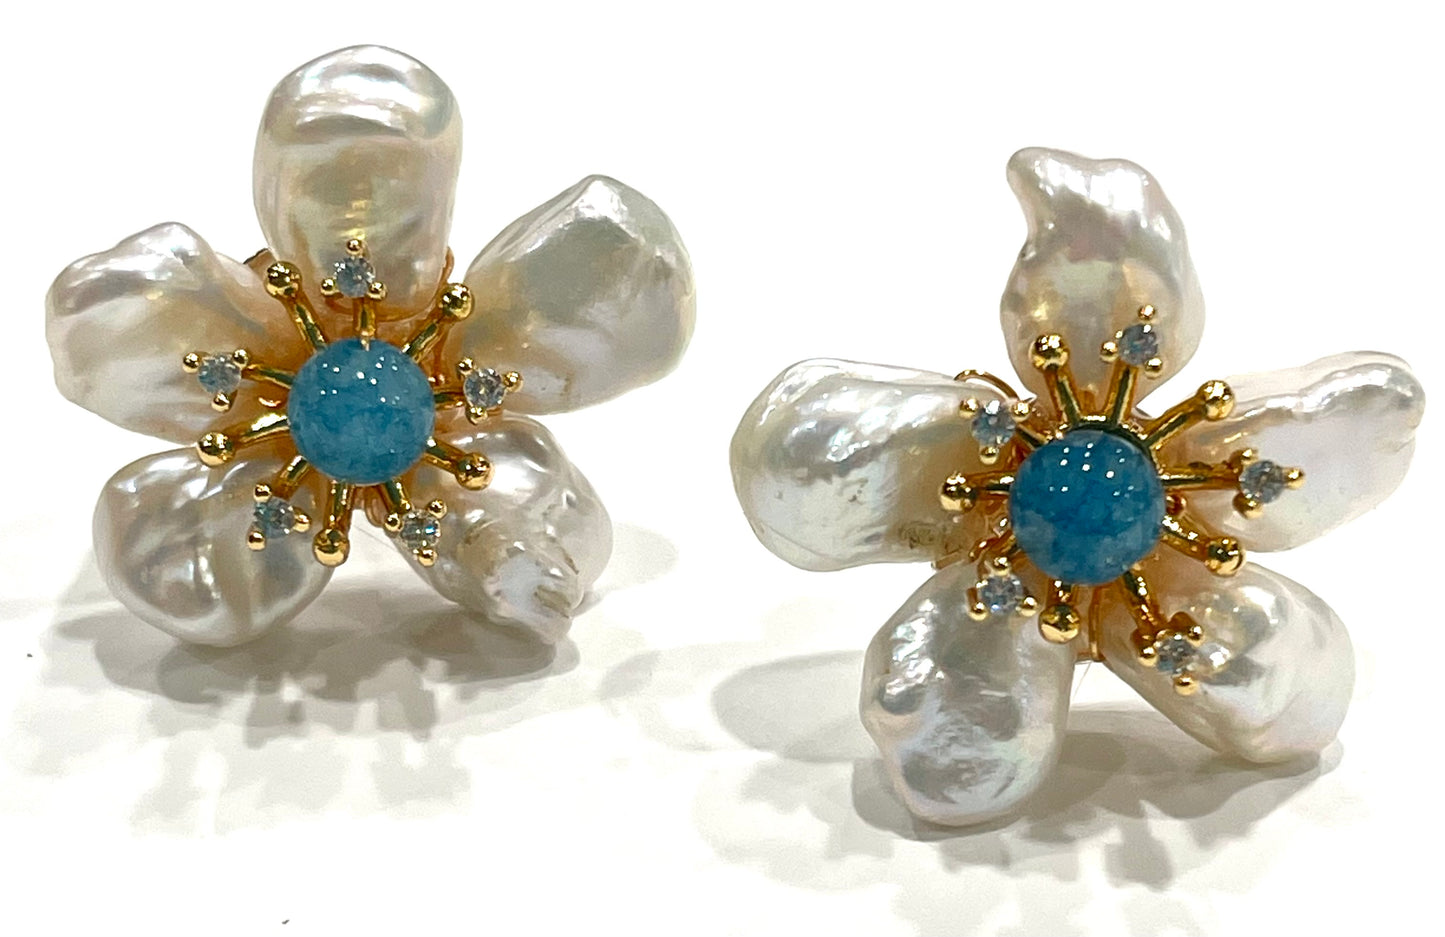 Pearl Petals and Aquamarine Flower Statement Earrings 1"